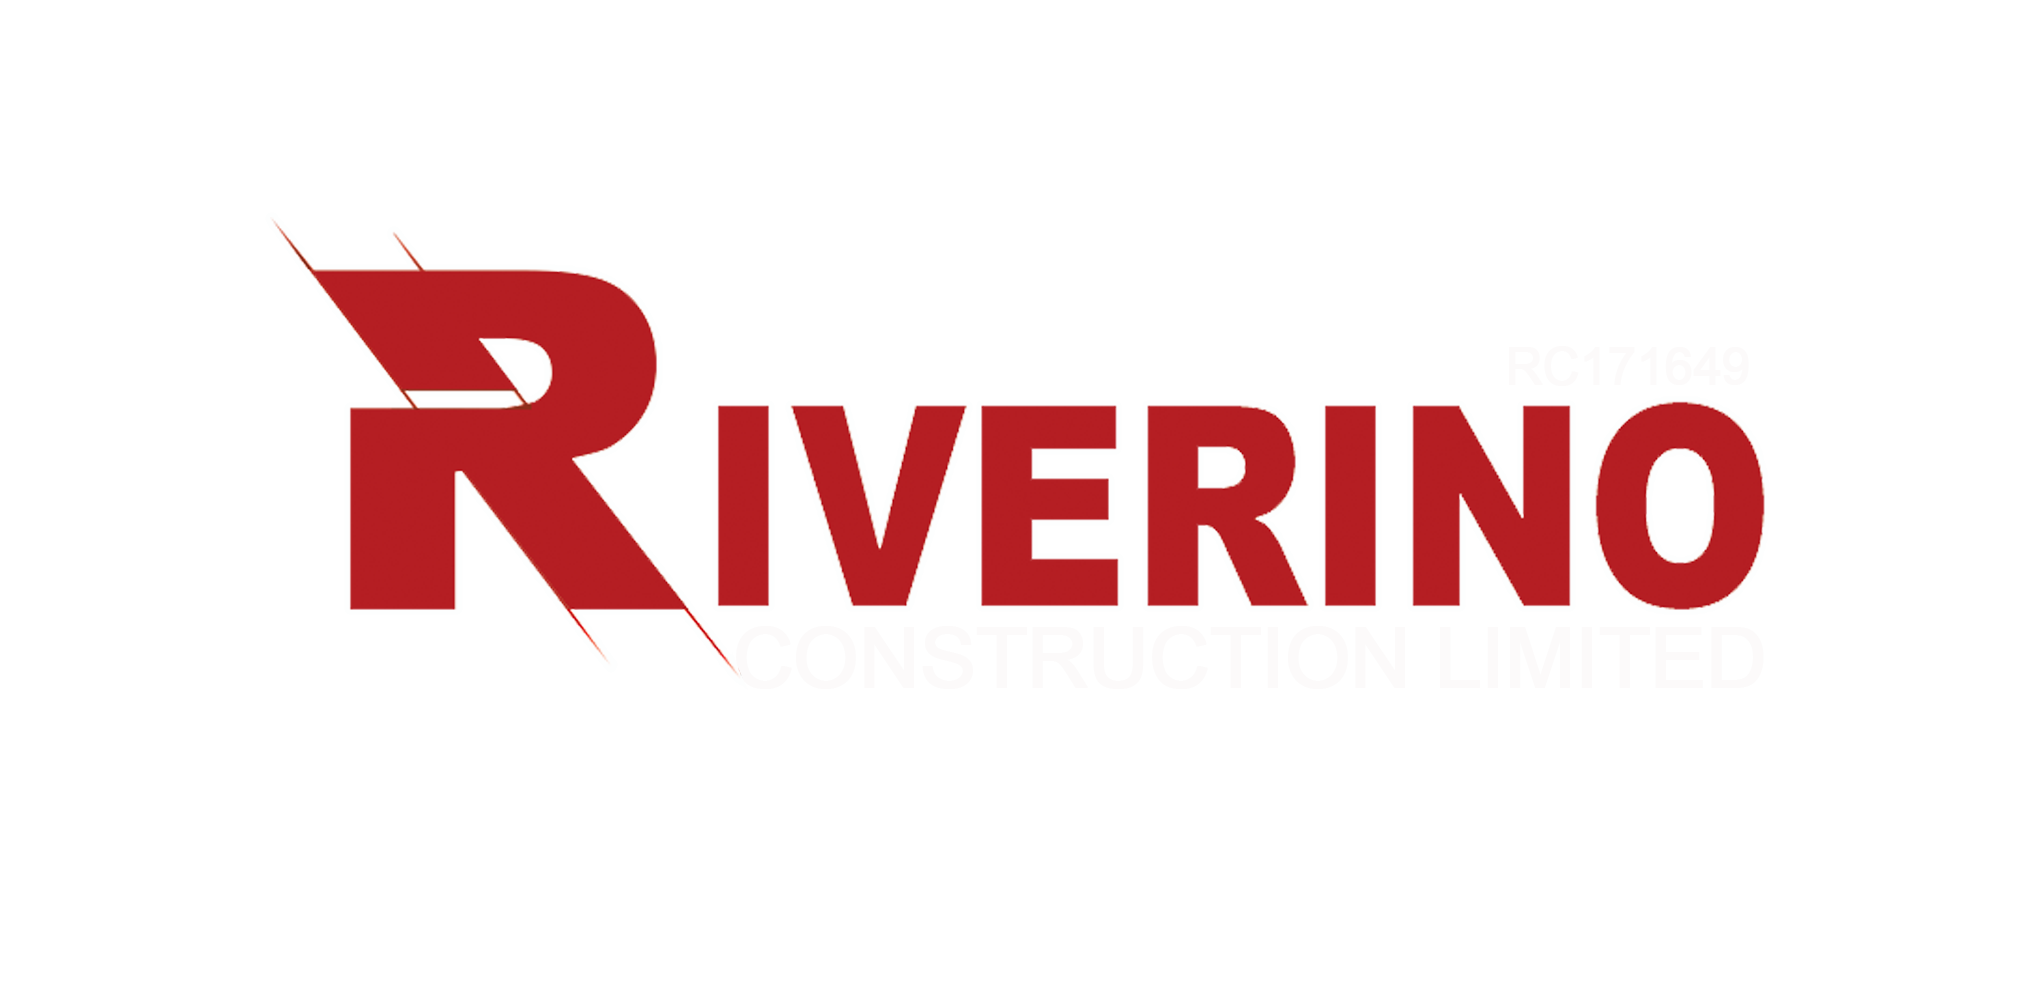 Upcoming event – Riverino Furniture